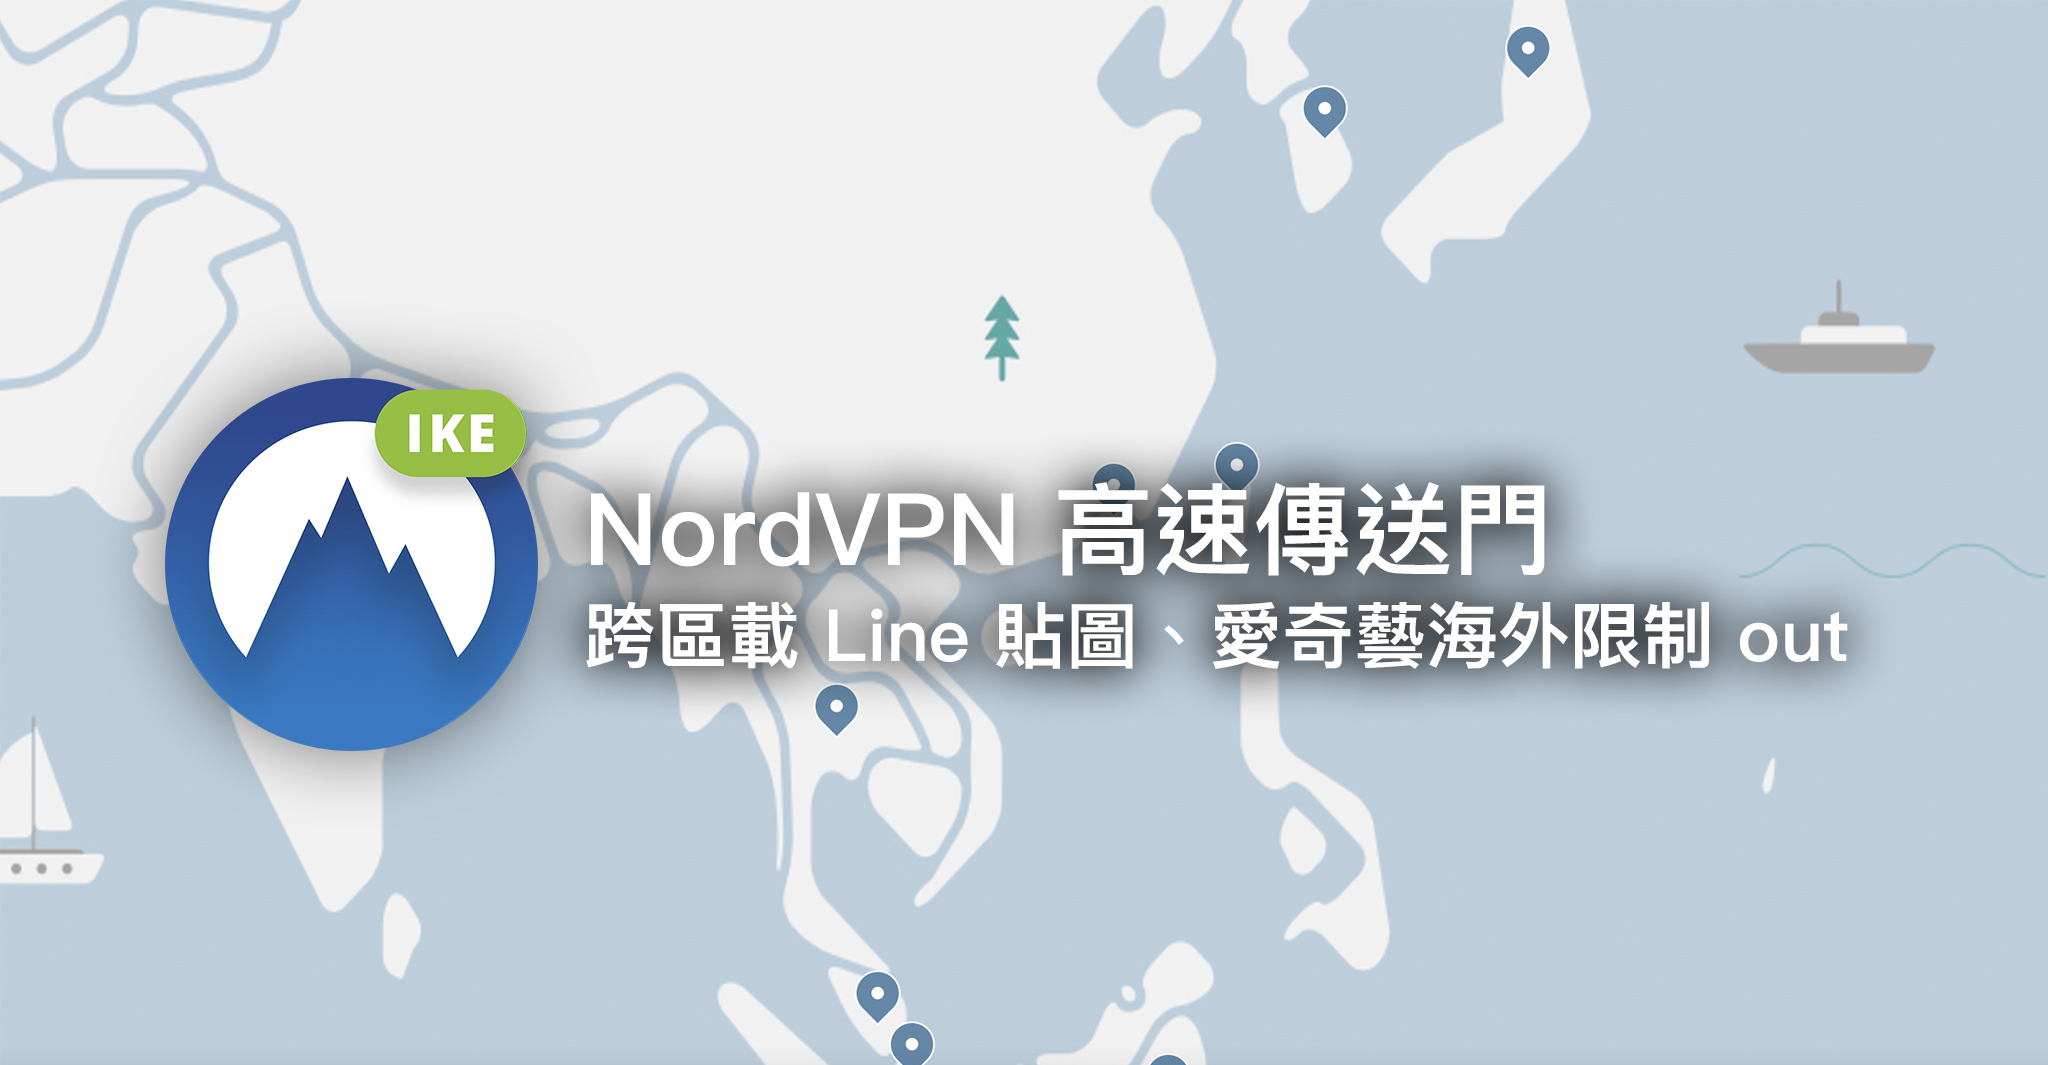 NordVPN 高速傳送門 跨區載 Line 貼圖、愛奇藝海外限制 out！